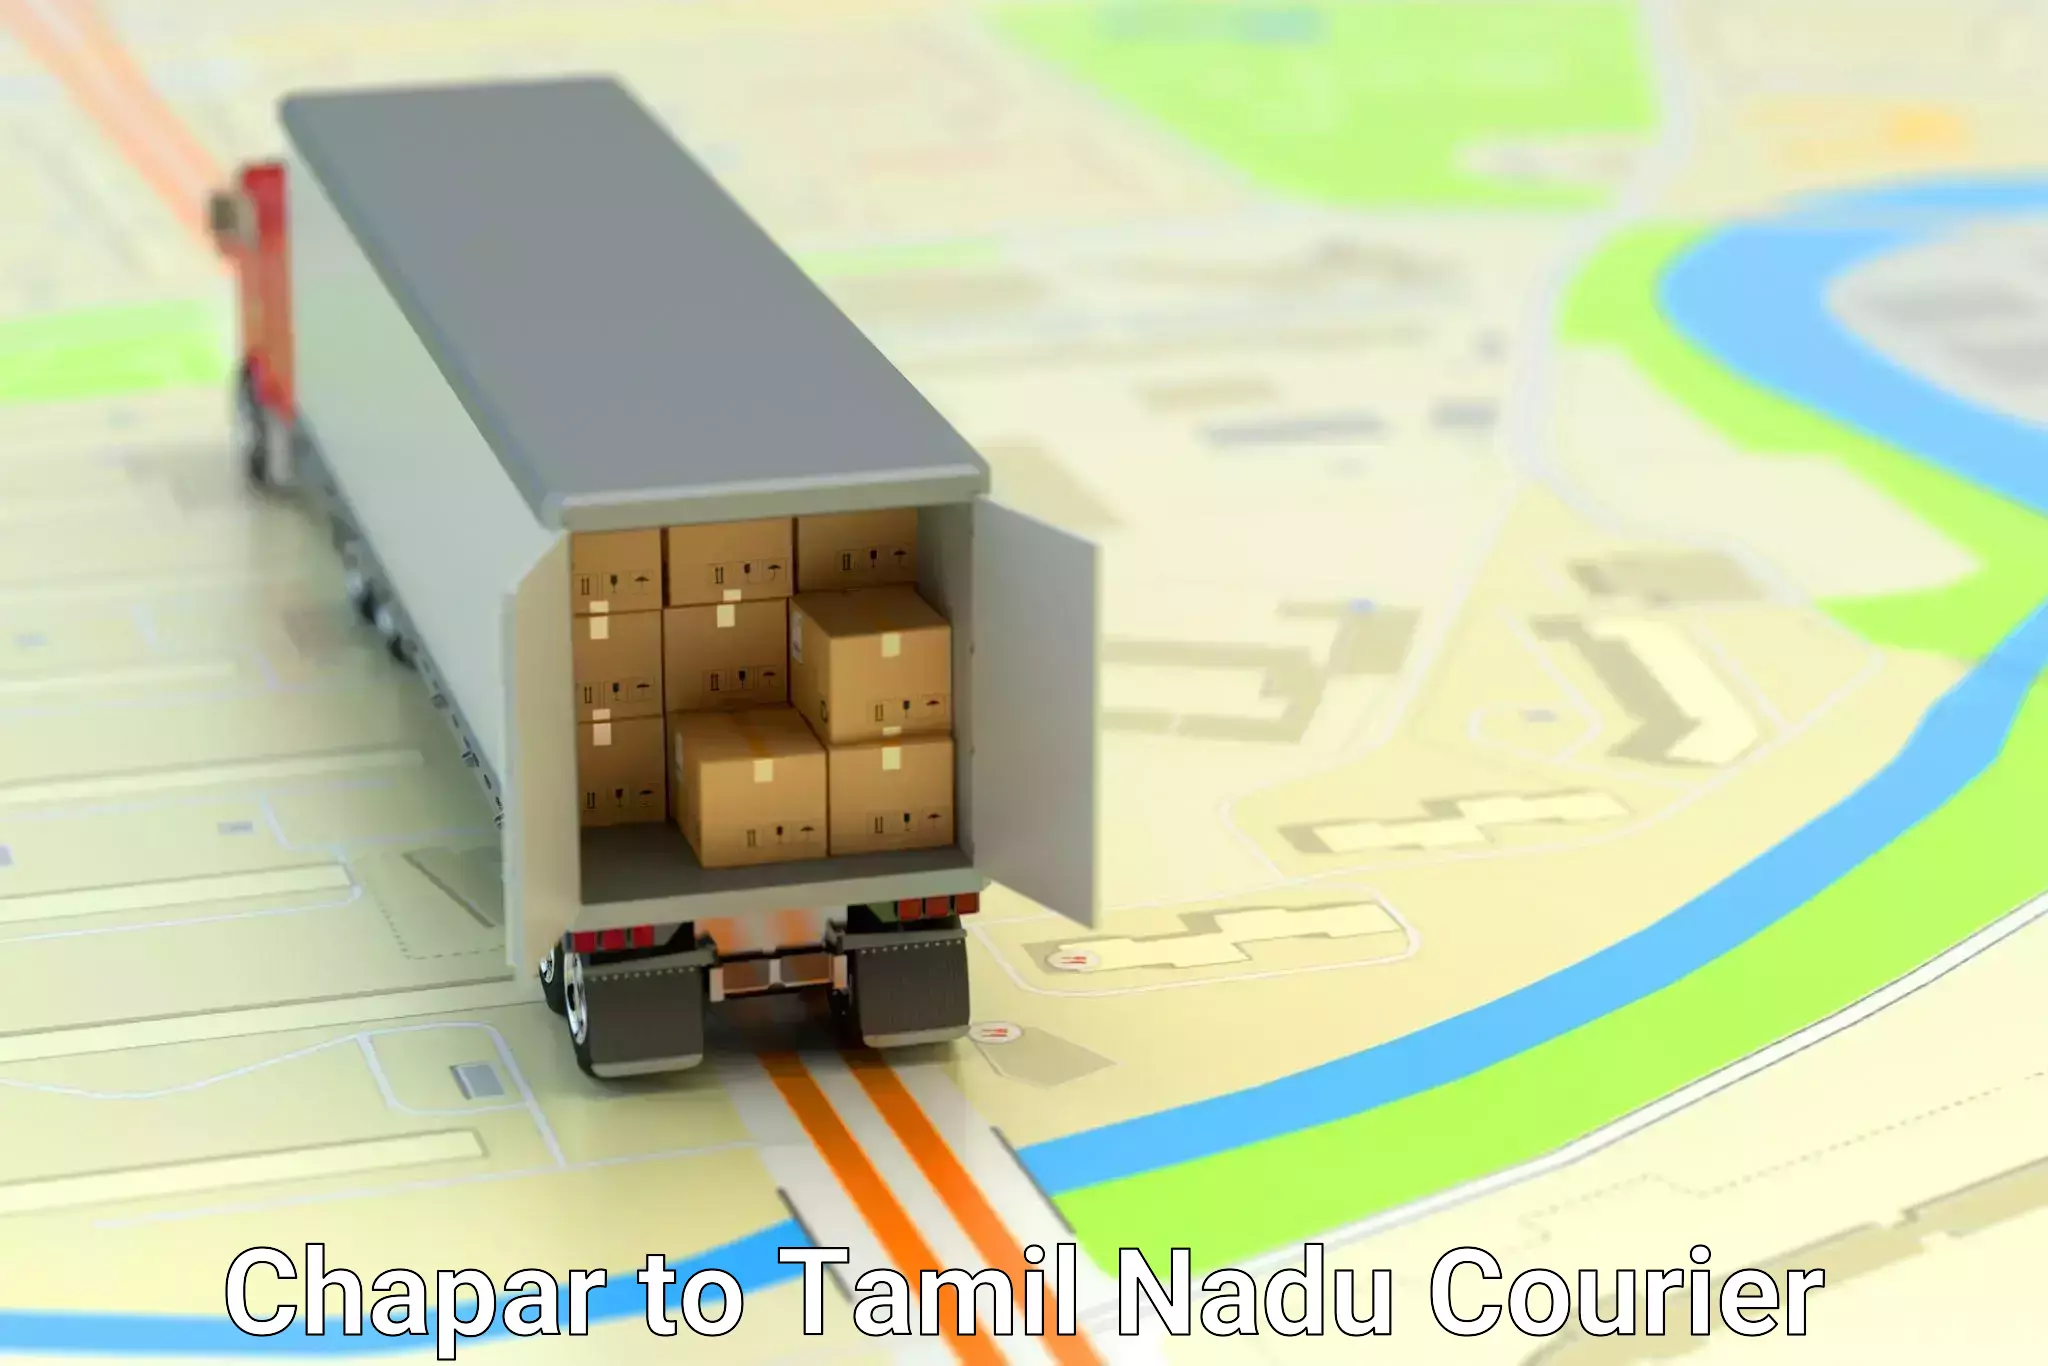 Tracking updates in Chapar to Tamil Nadu